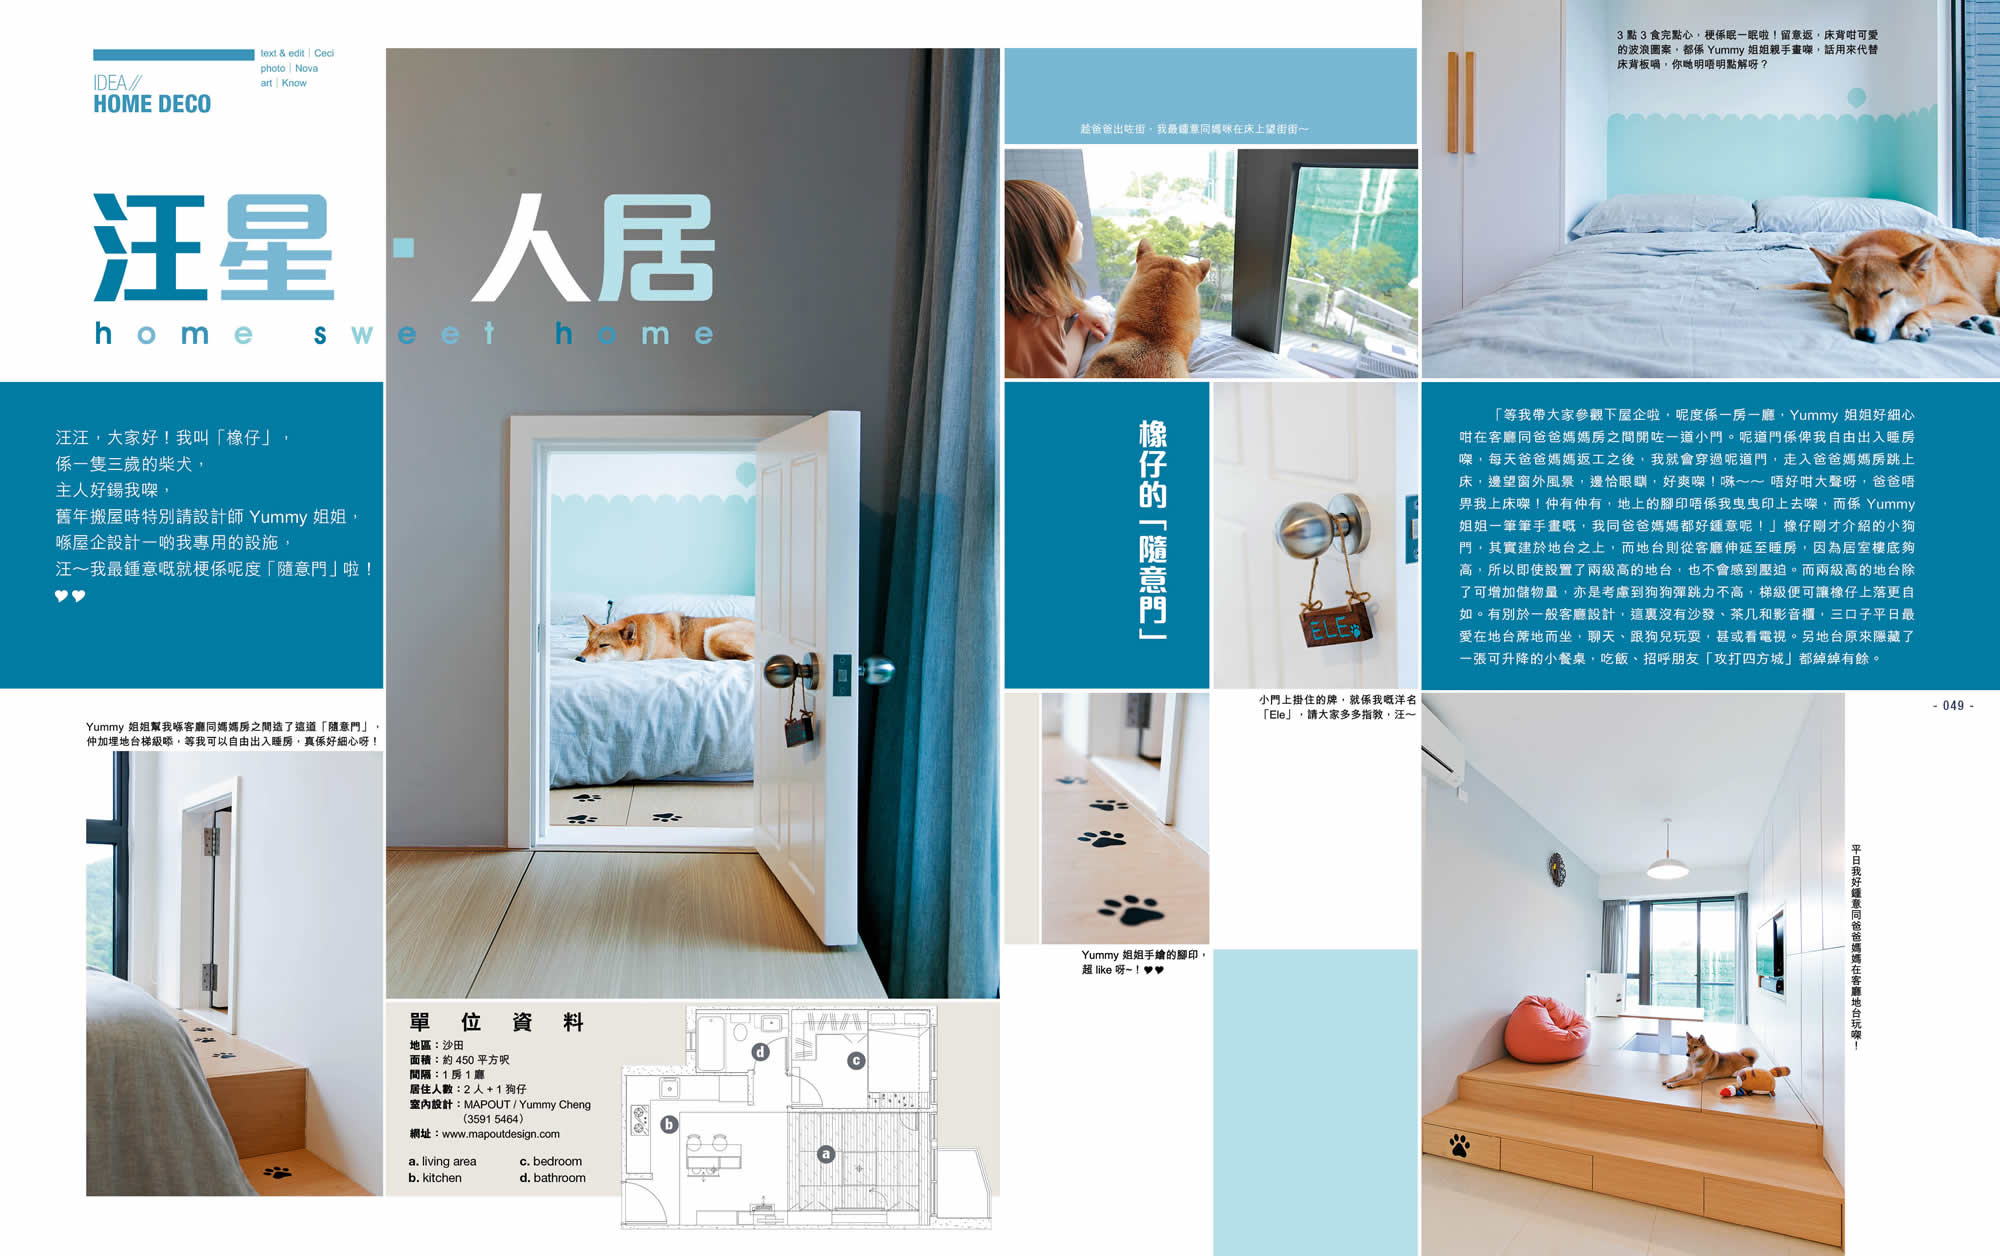 U Magazine - Home Deco (Home Sweet Home) 1